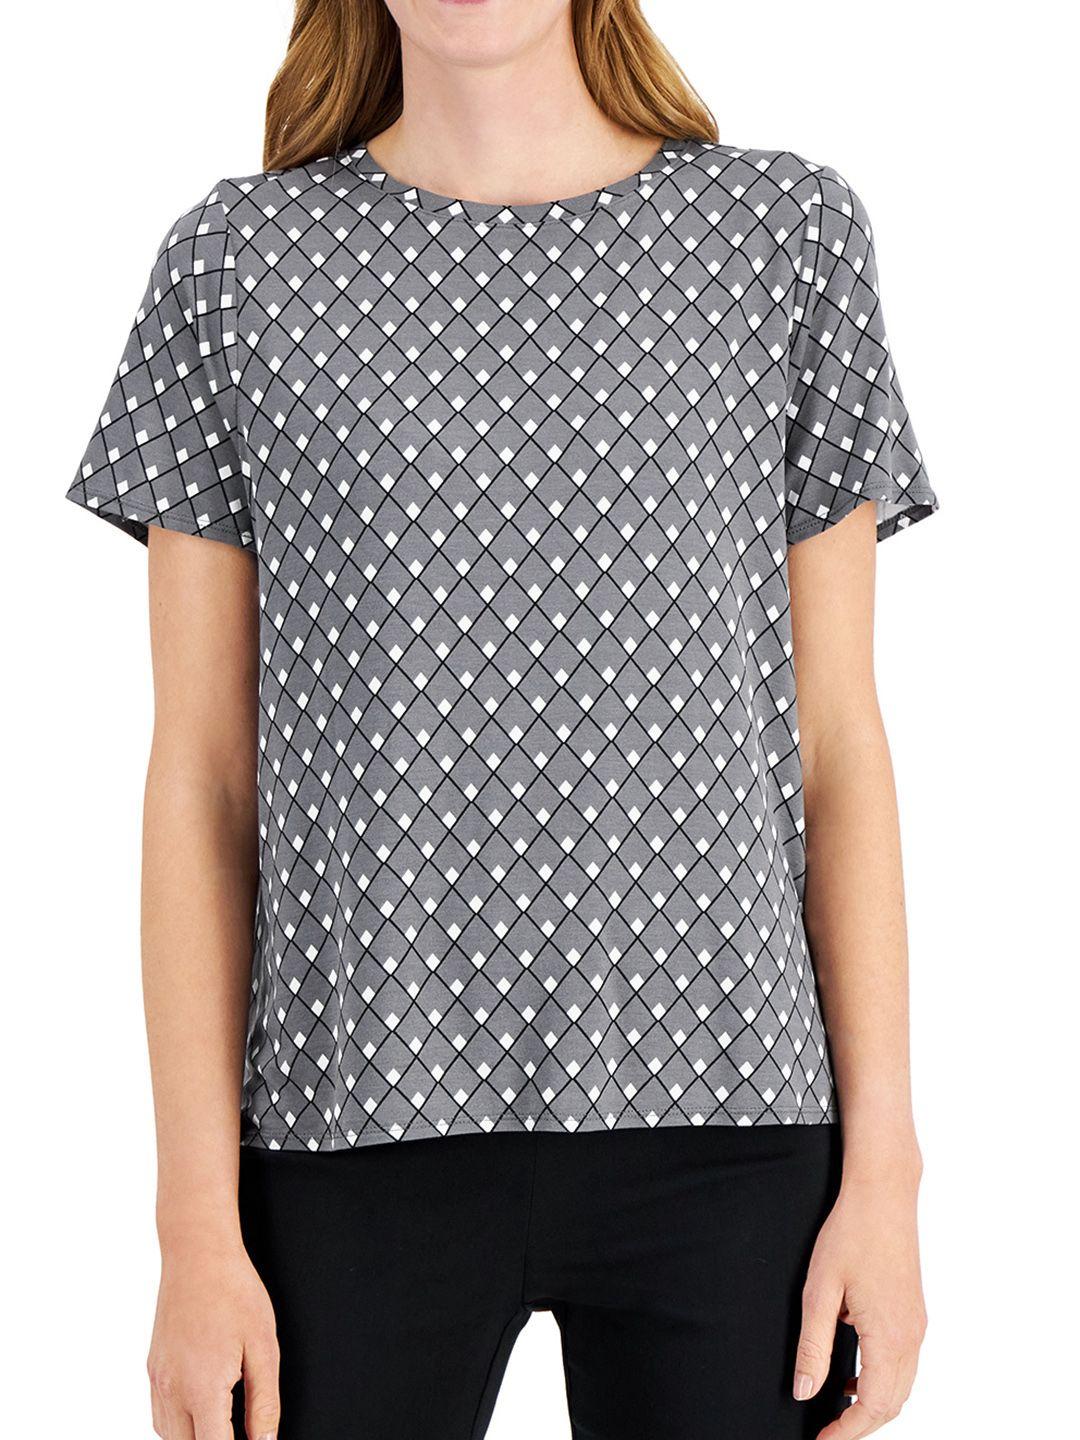 macy's alfani grey & white geometric print top